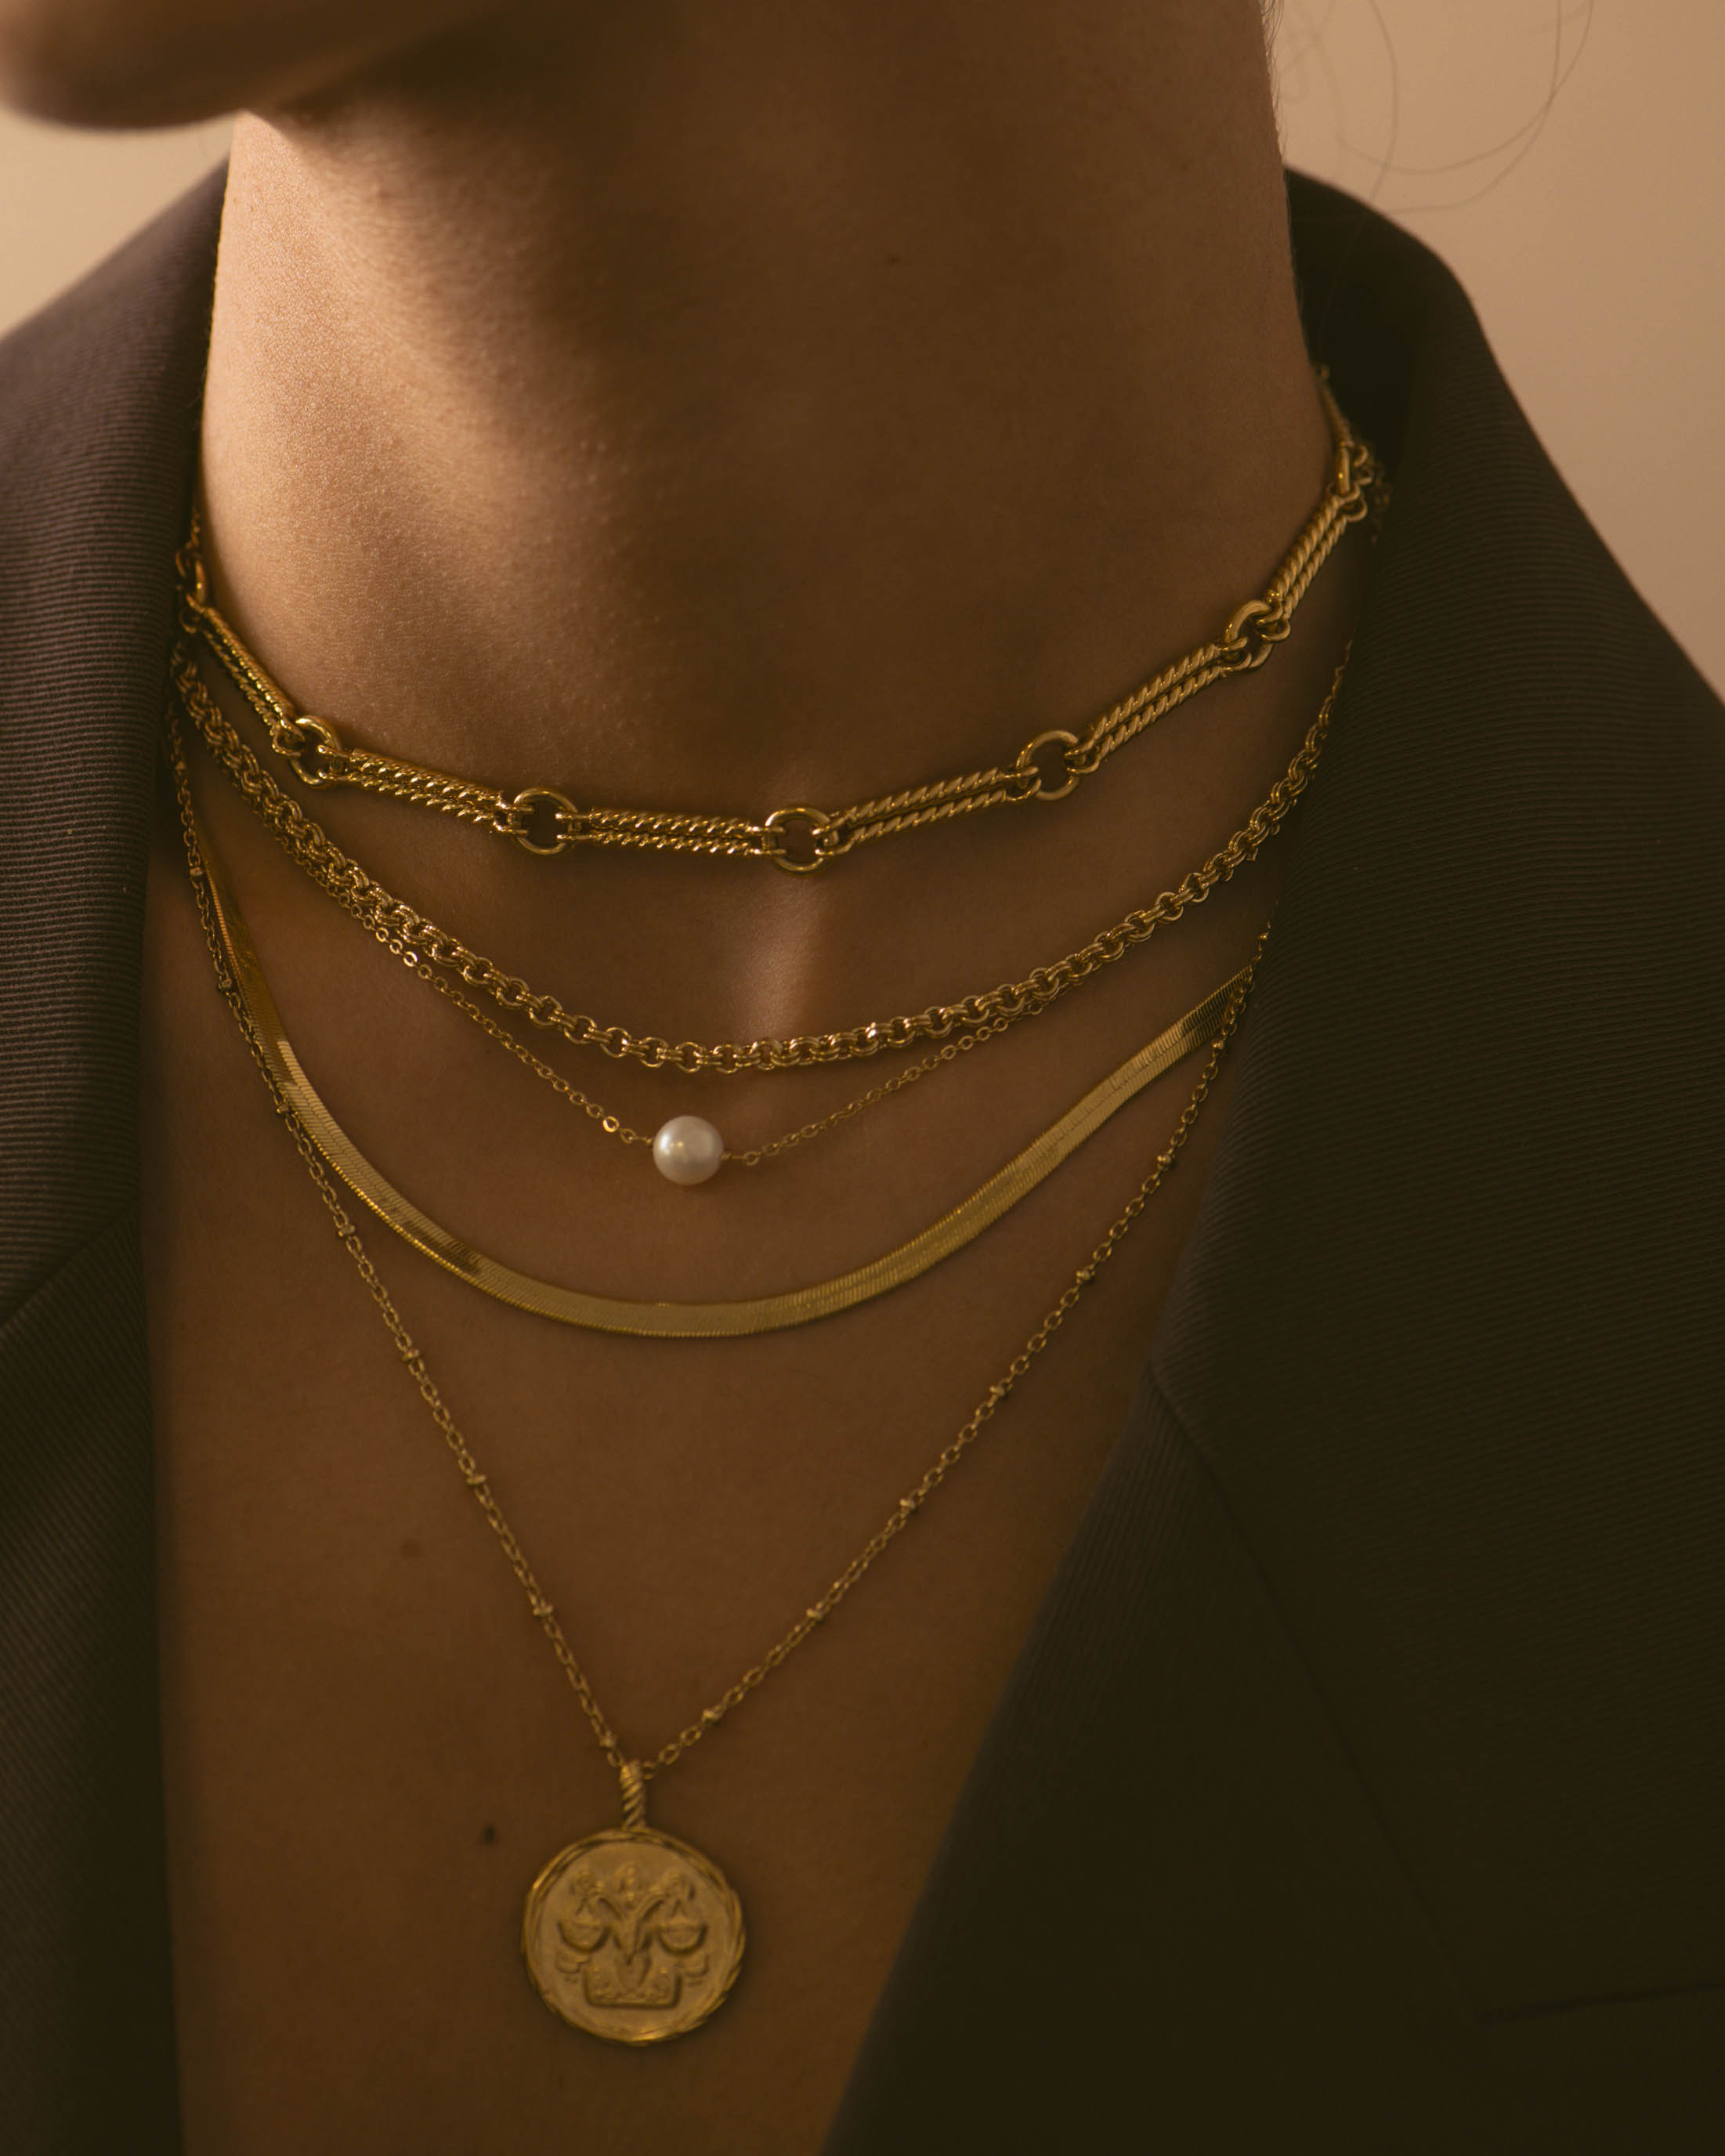 Astro Libra necklace